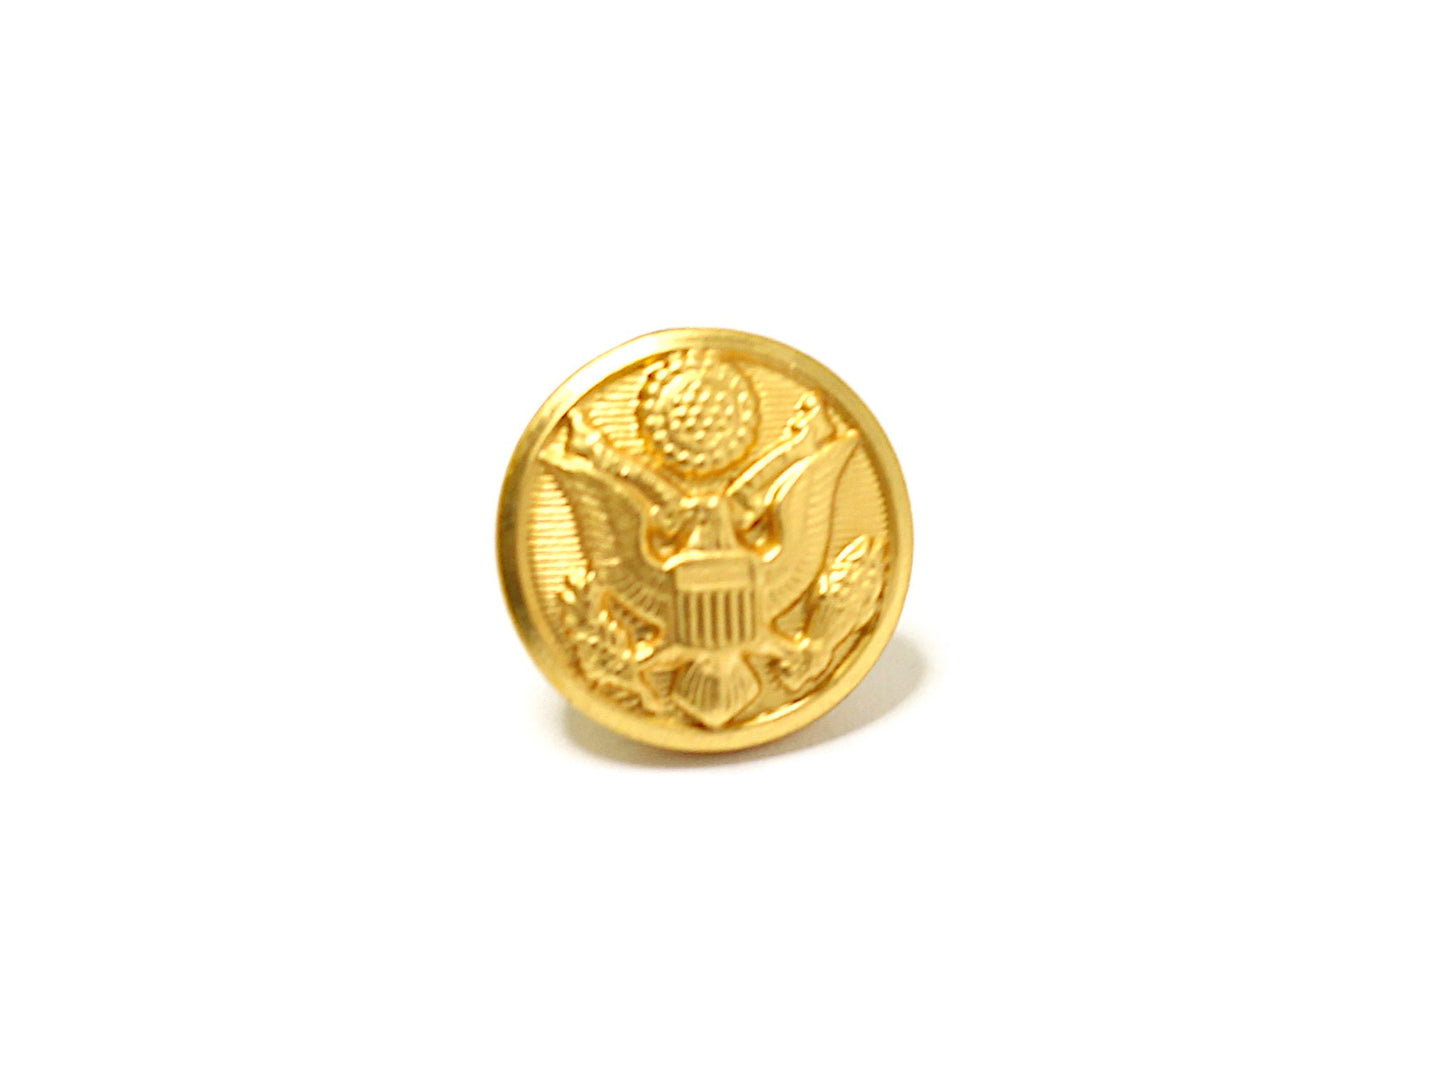 Army Button Lapel Pin